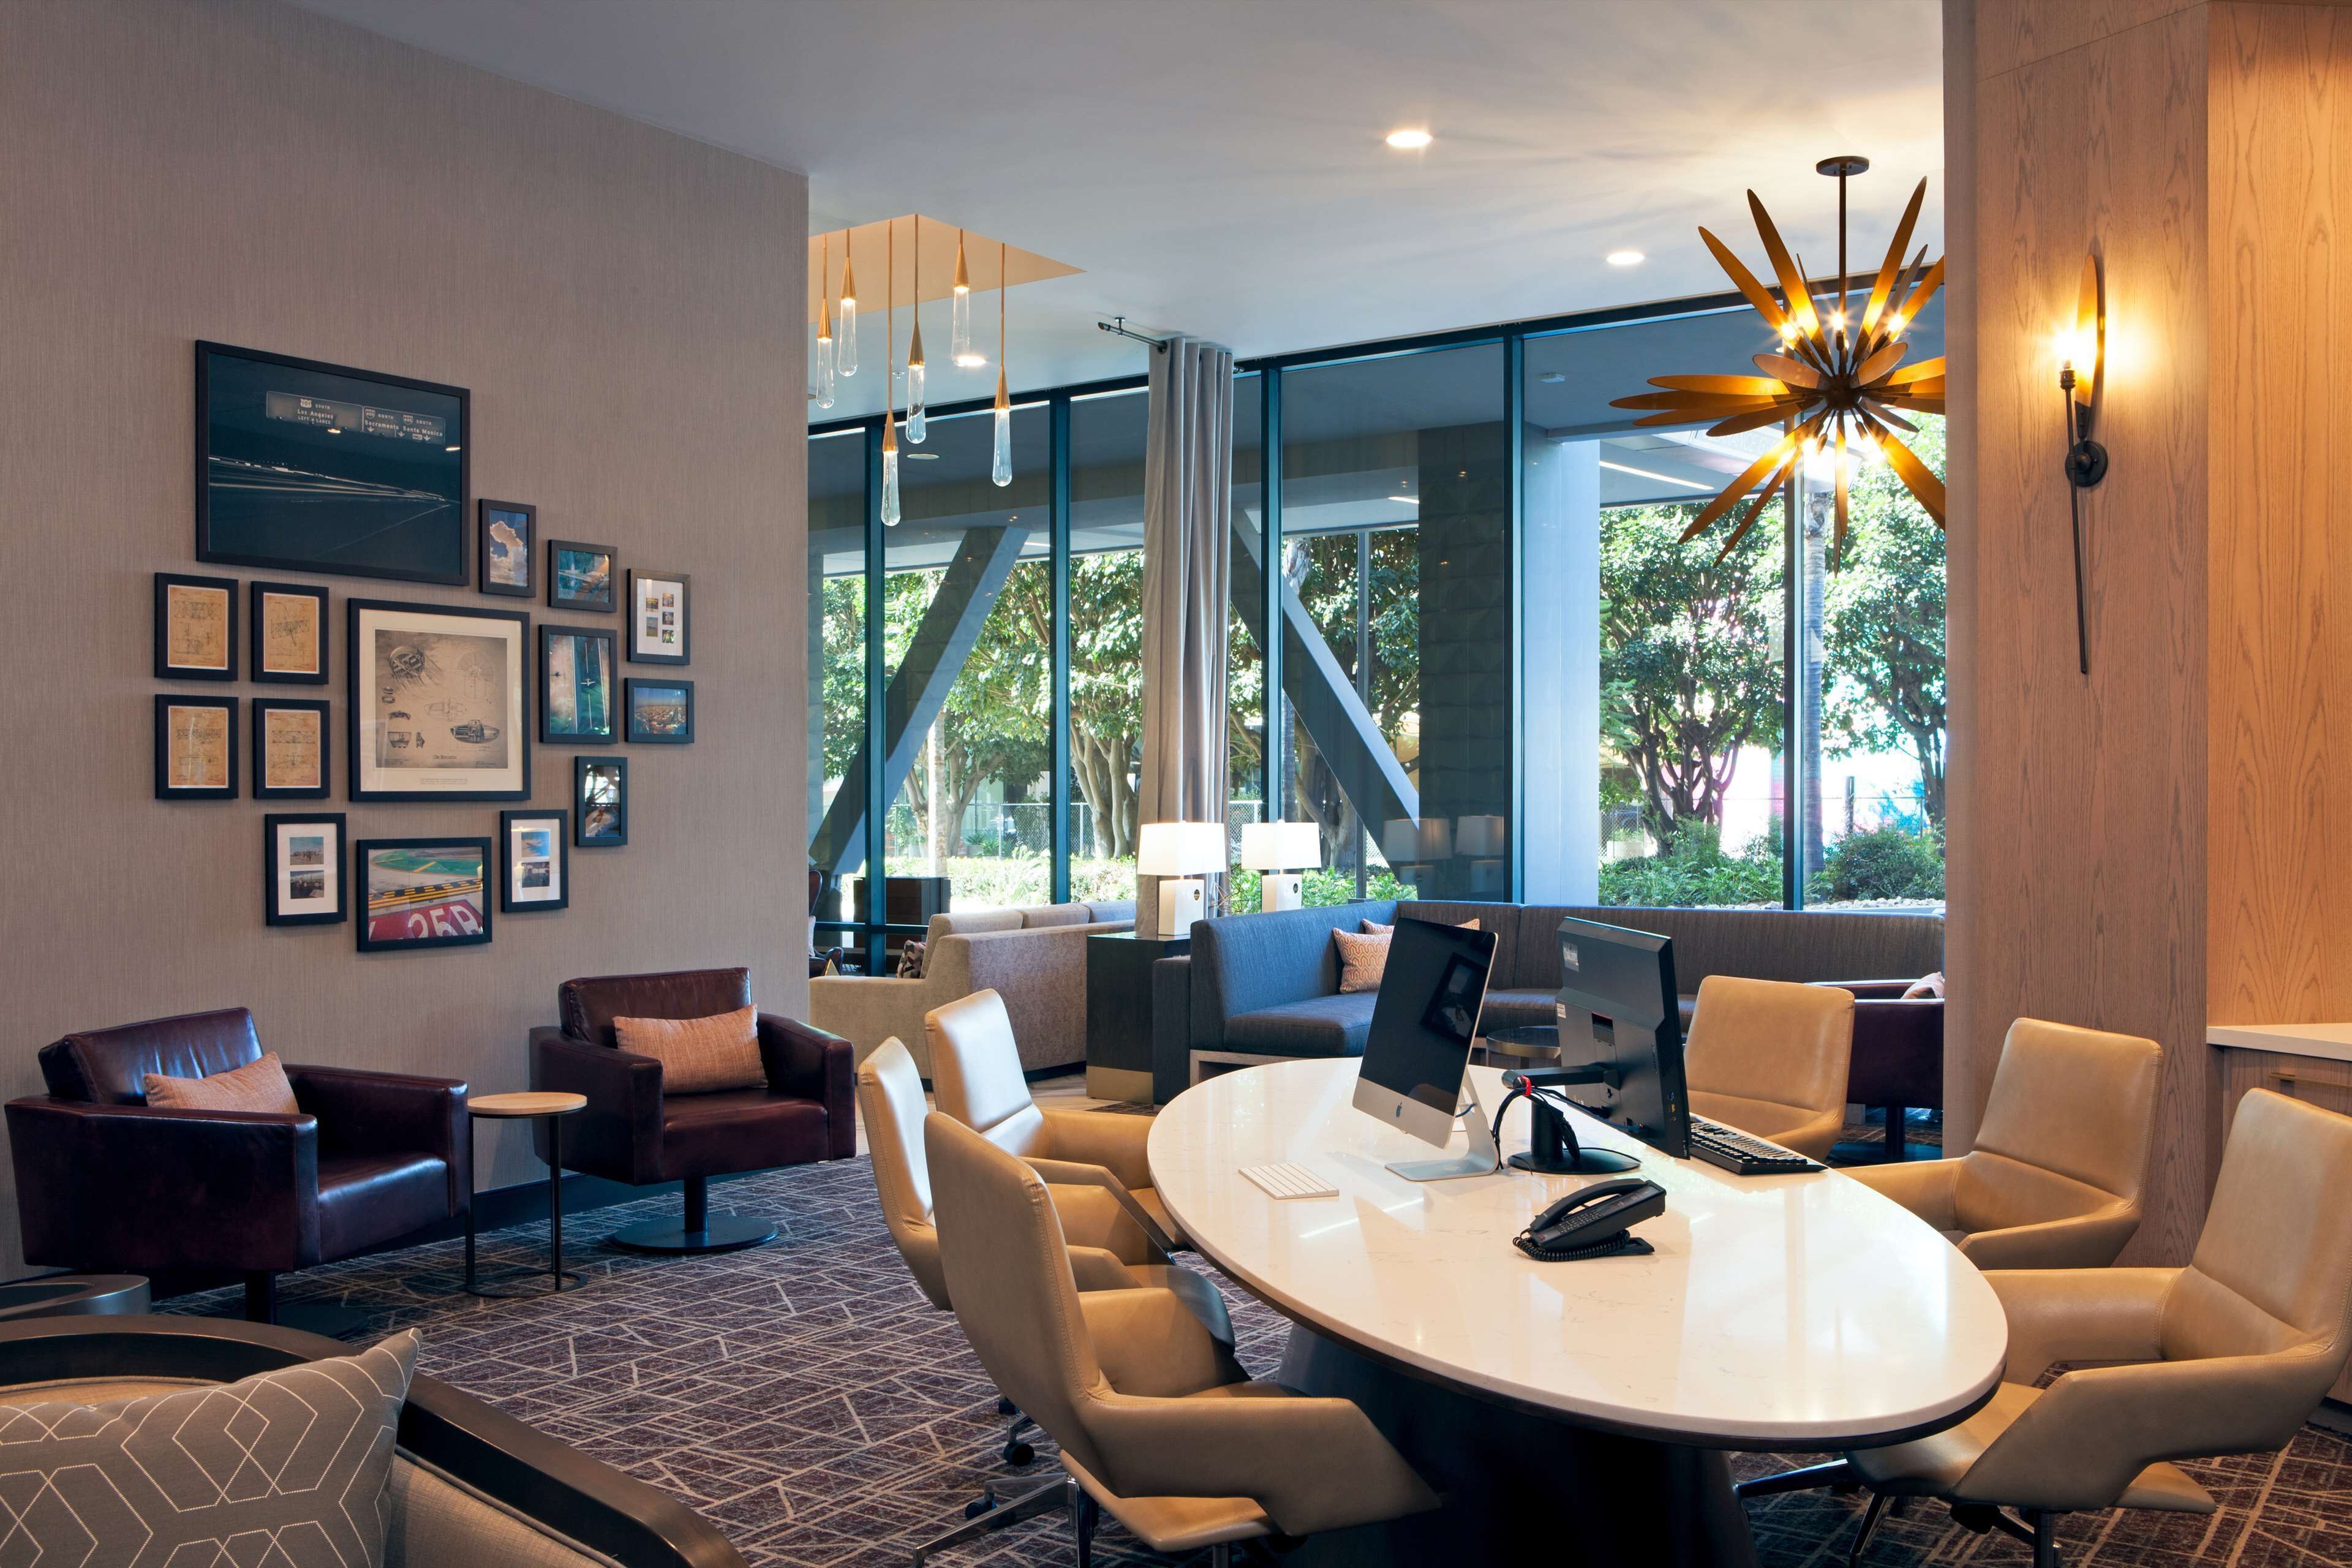 Homewood Suites by Hilton Los Angeles International Airport